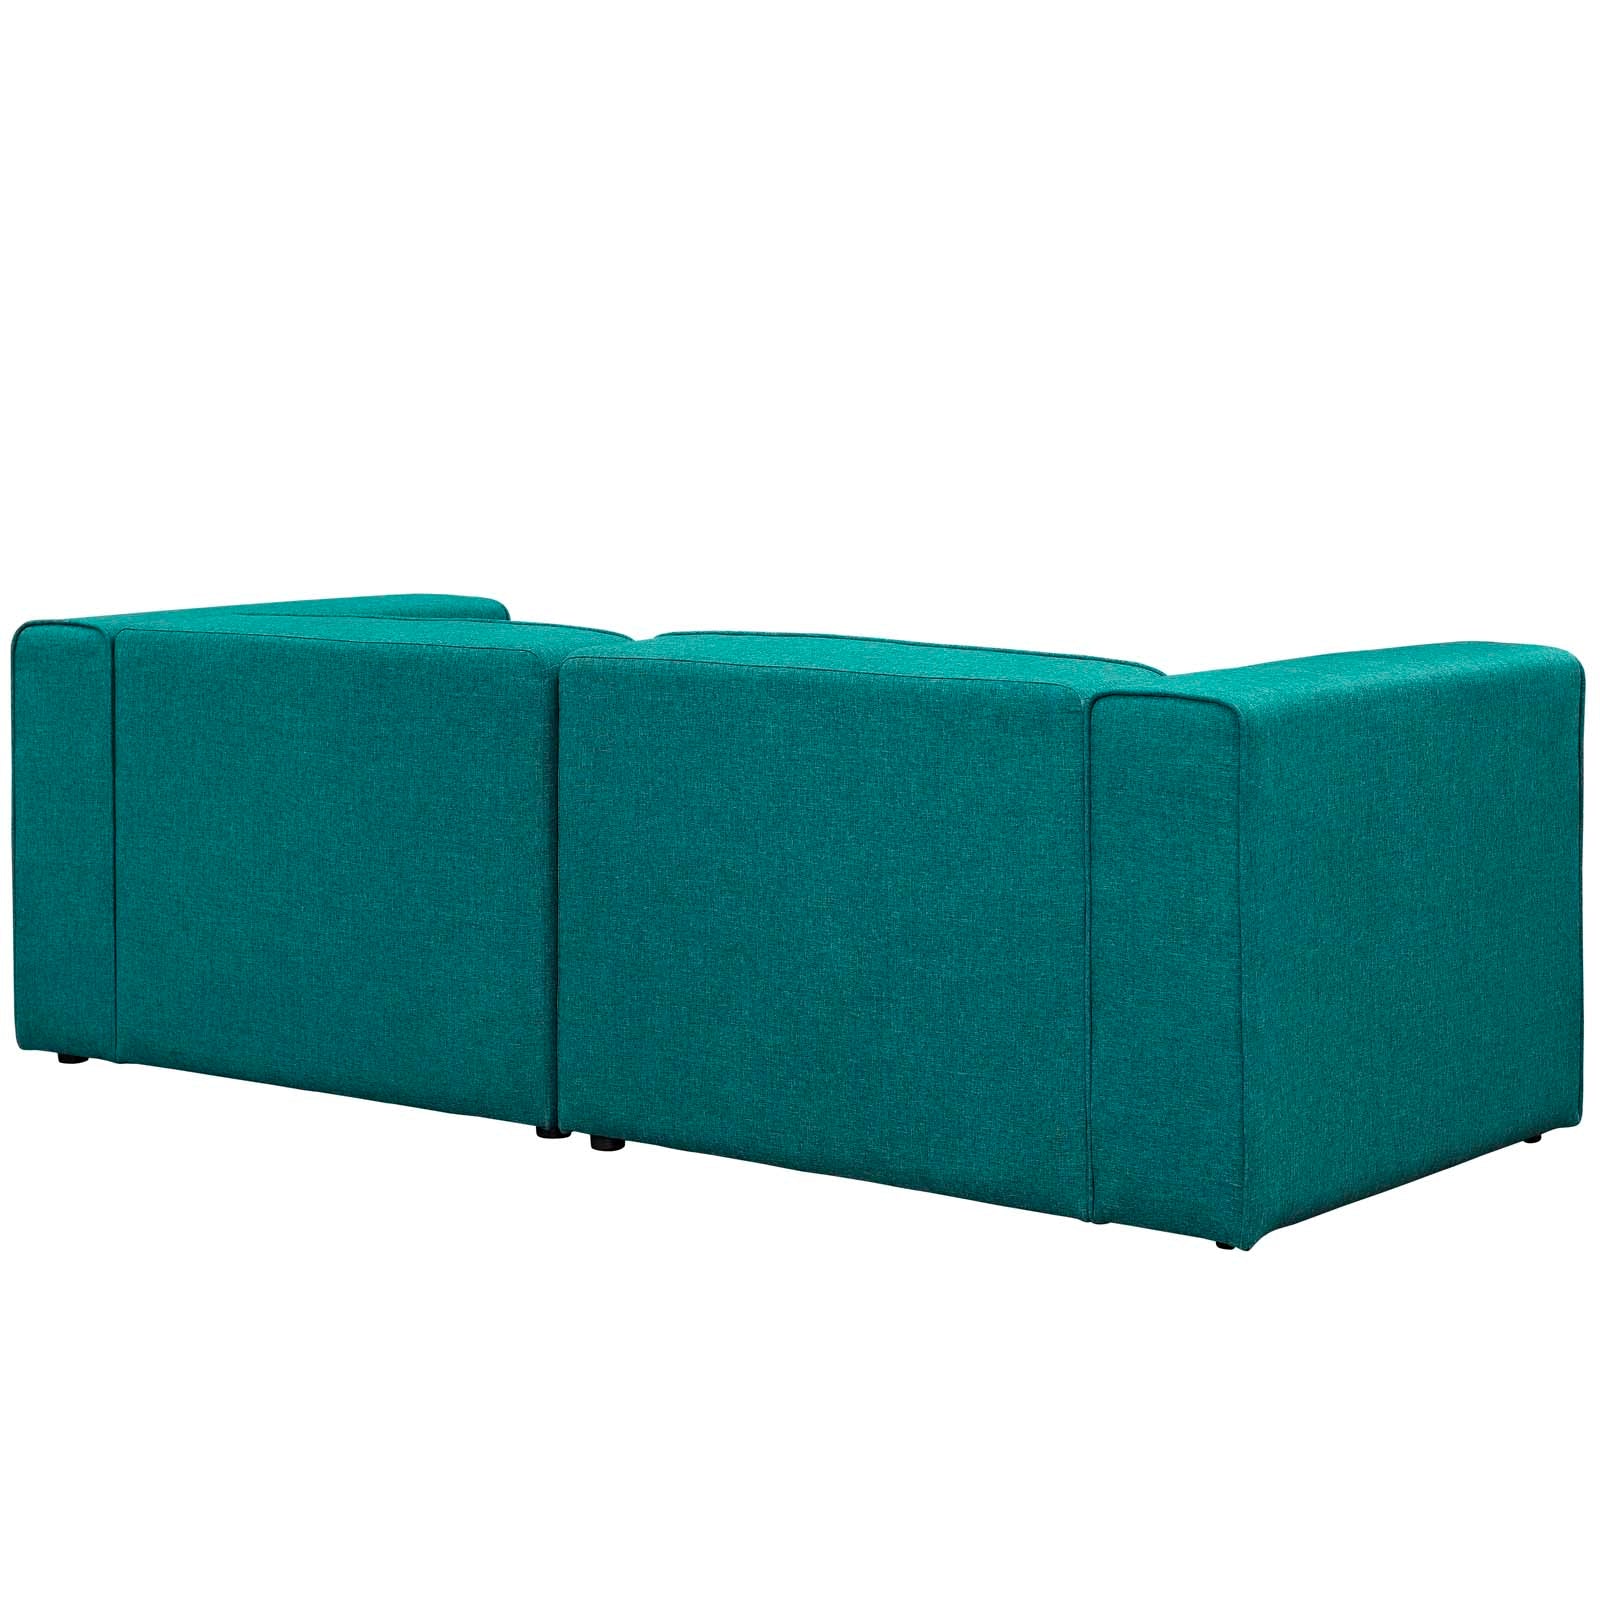 Mingle 2 Piece Upholstered Fabric Sectional Sofa Set - East Shore Modern Home Furnishings